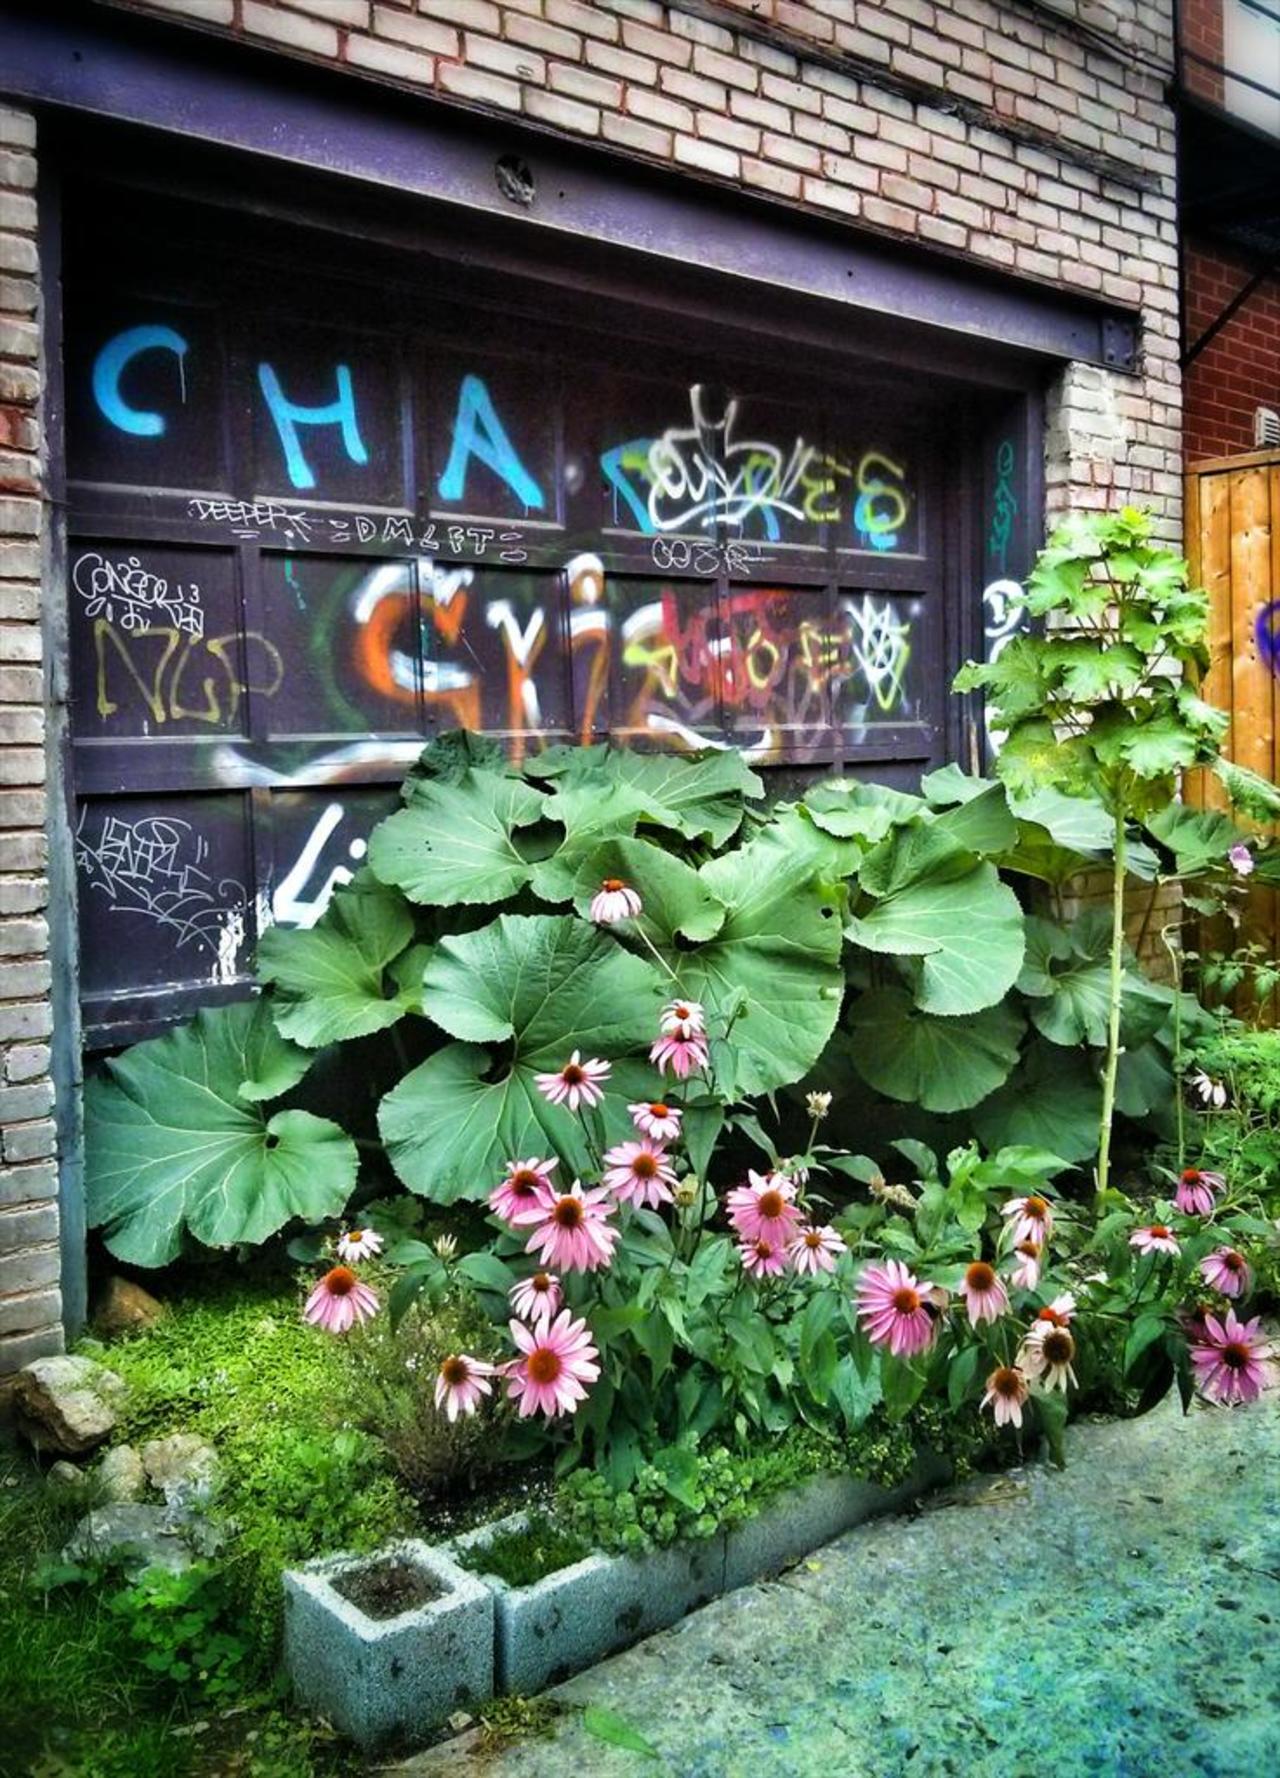 Montreal in August.
#tbt #graffiti #streetart #urbanart http://t.co/BGsOrHJ3DW